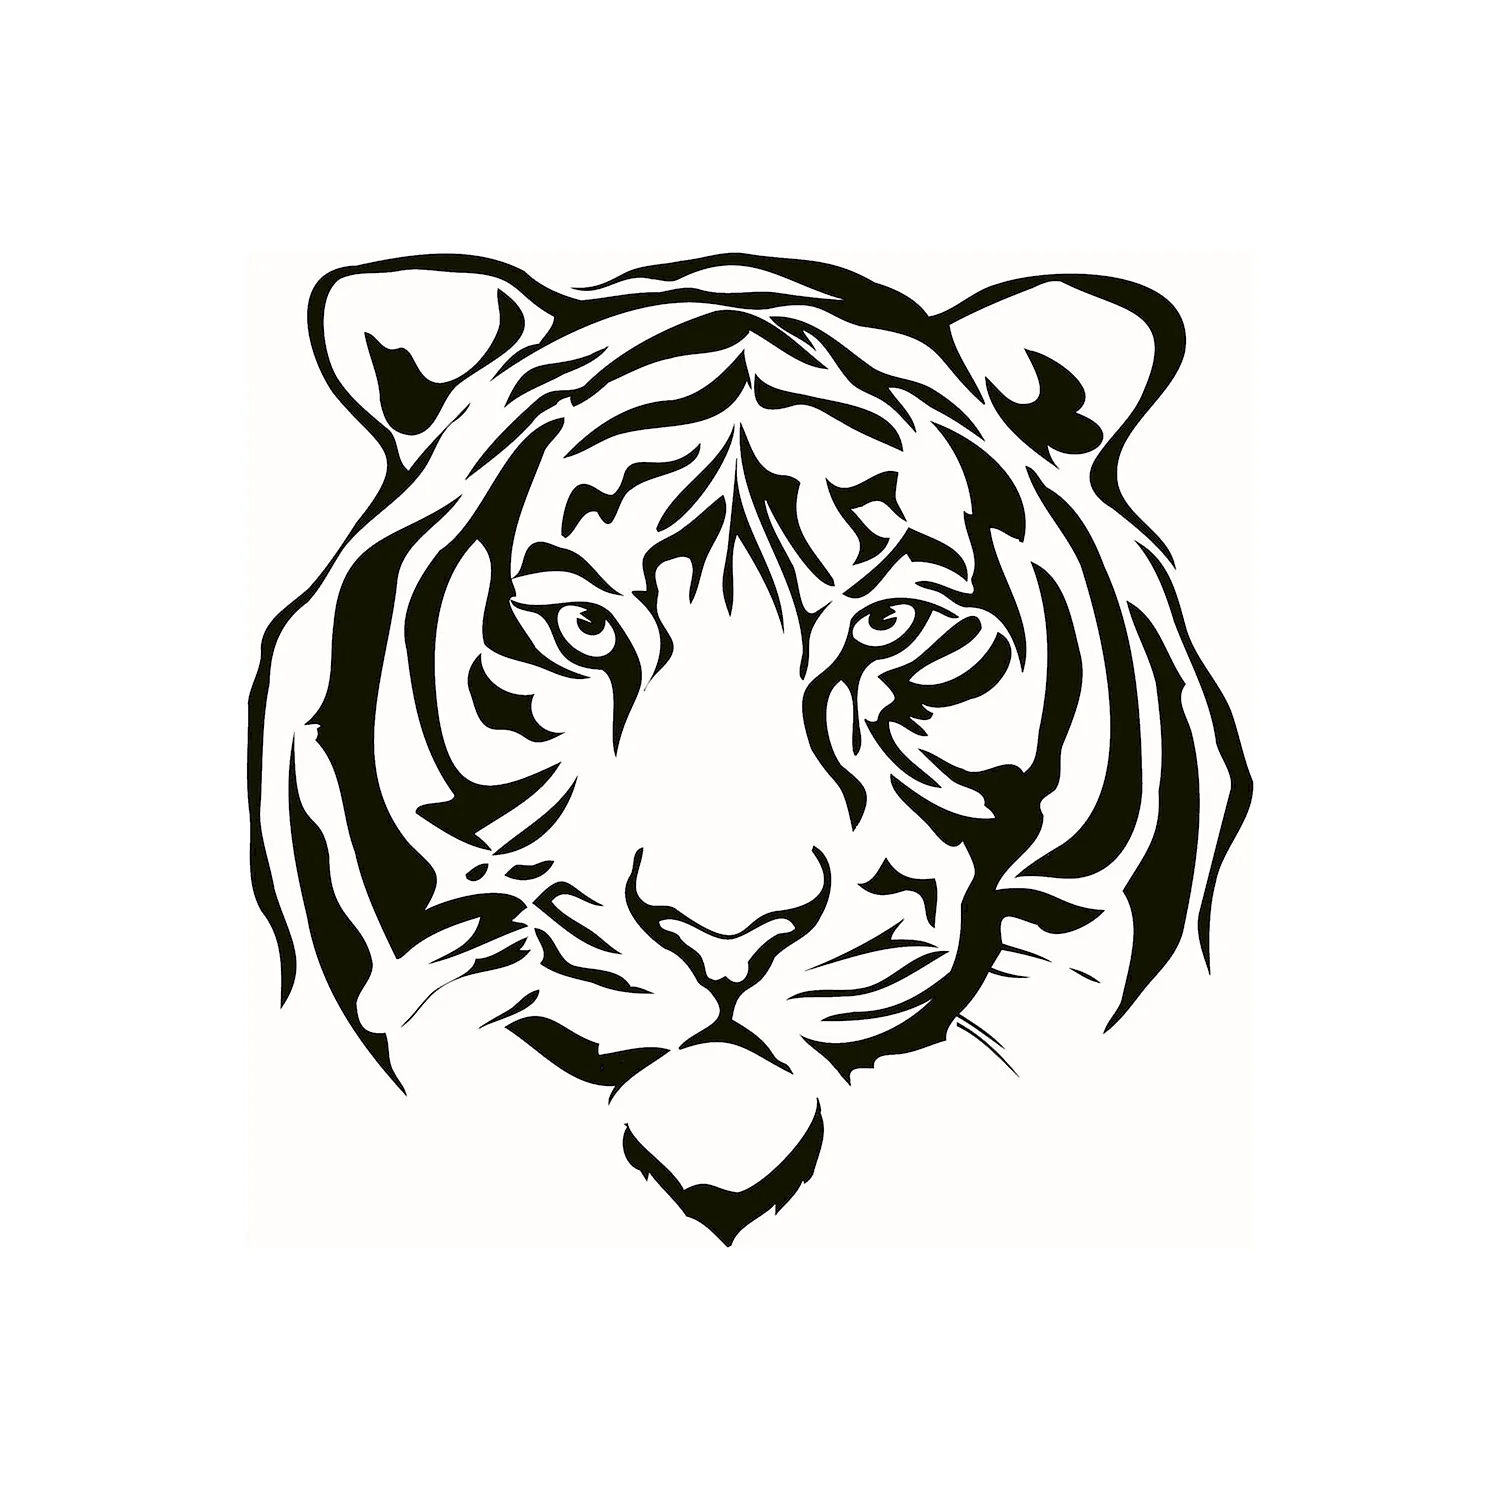 Тигр вектор